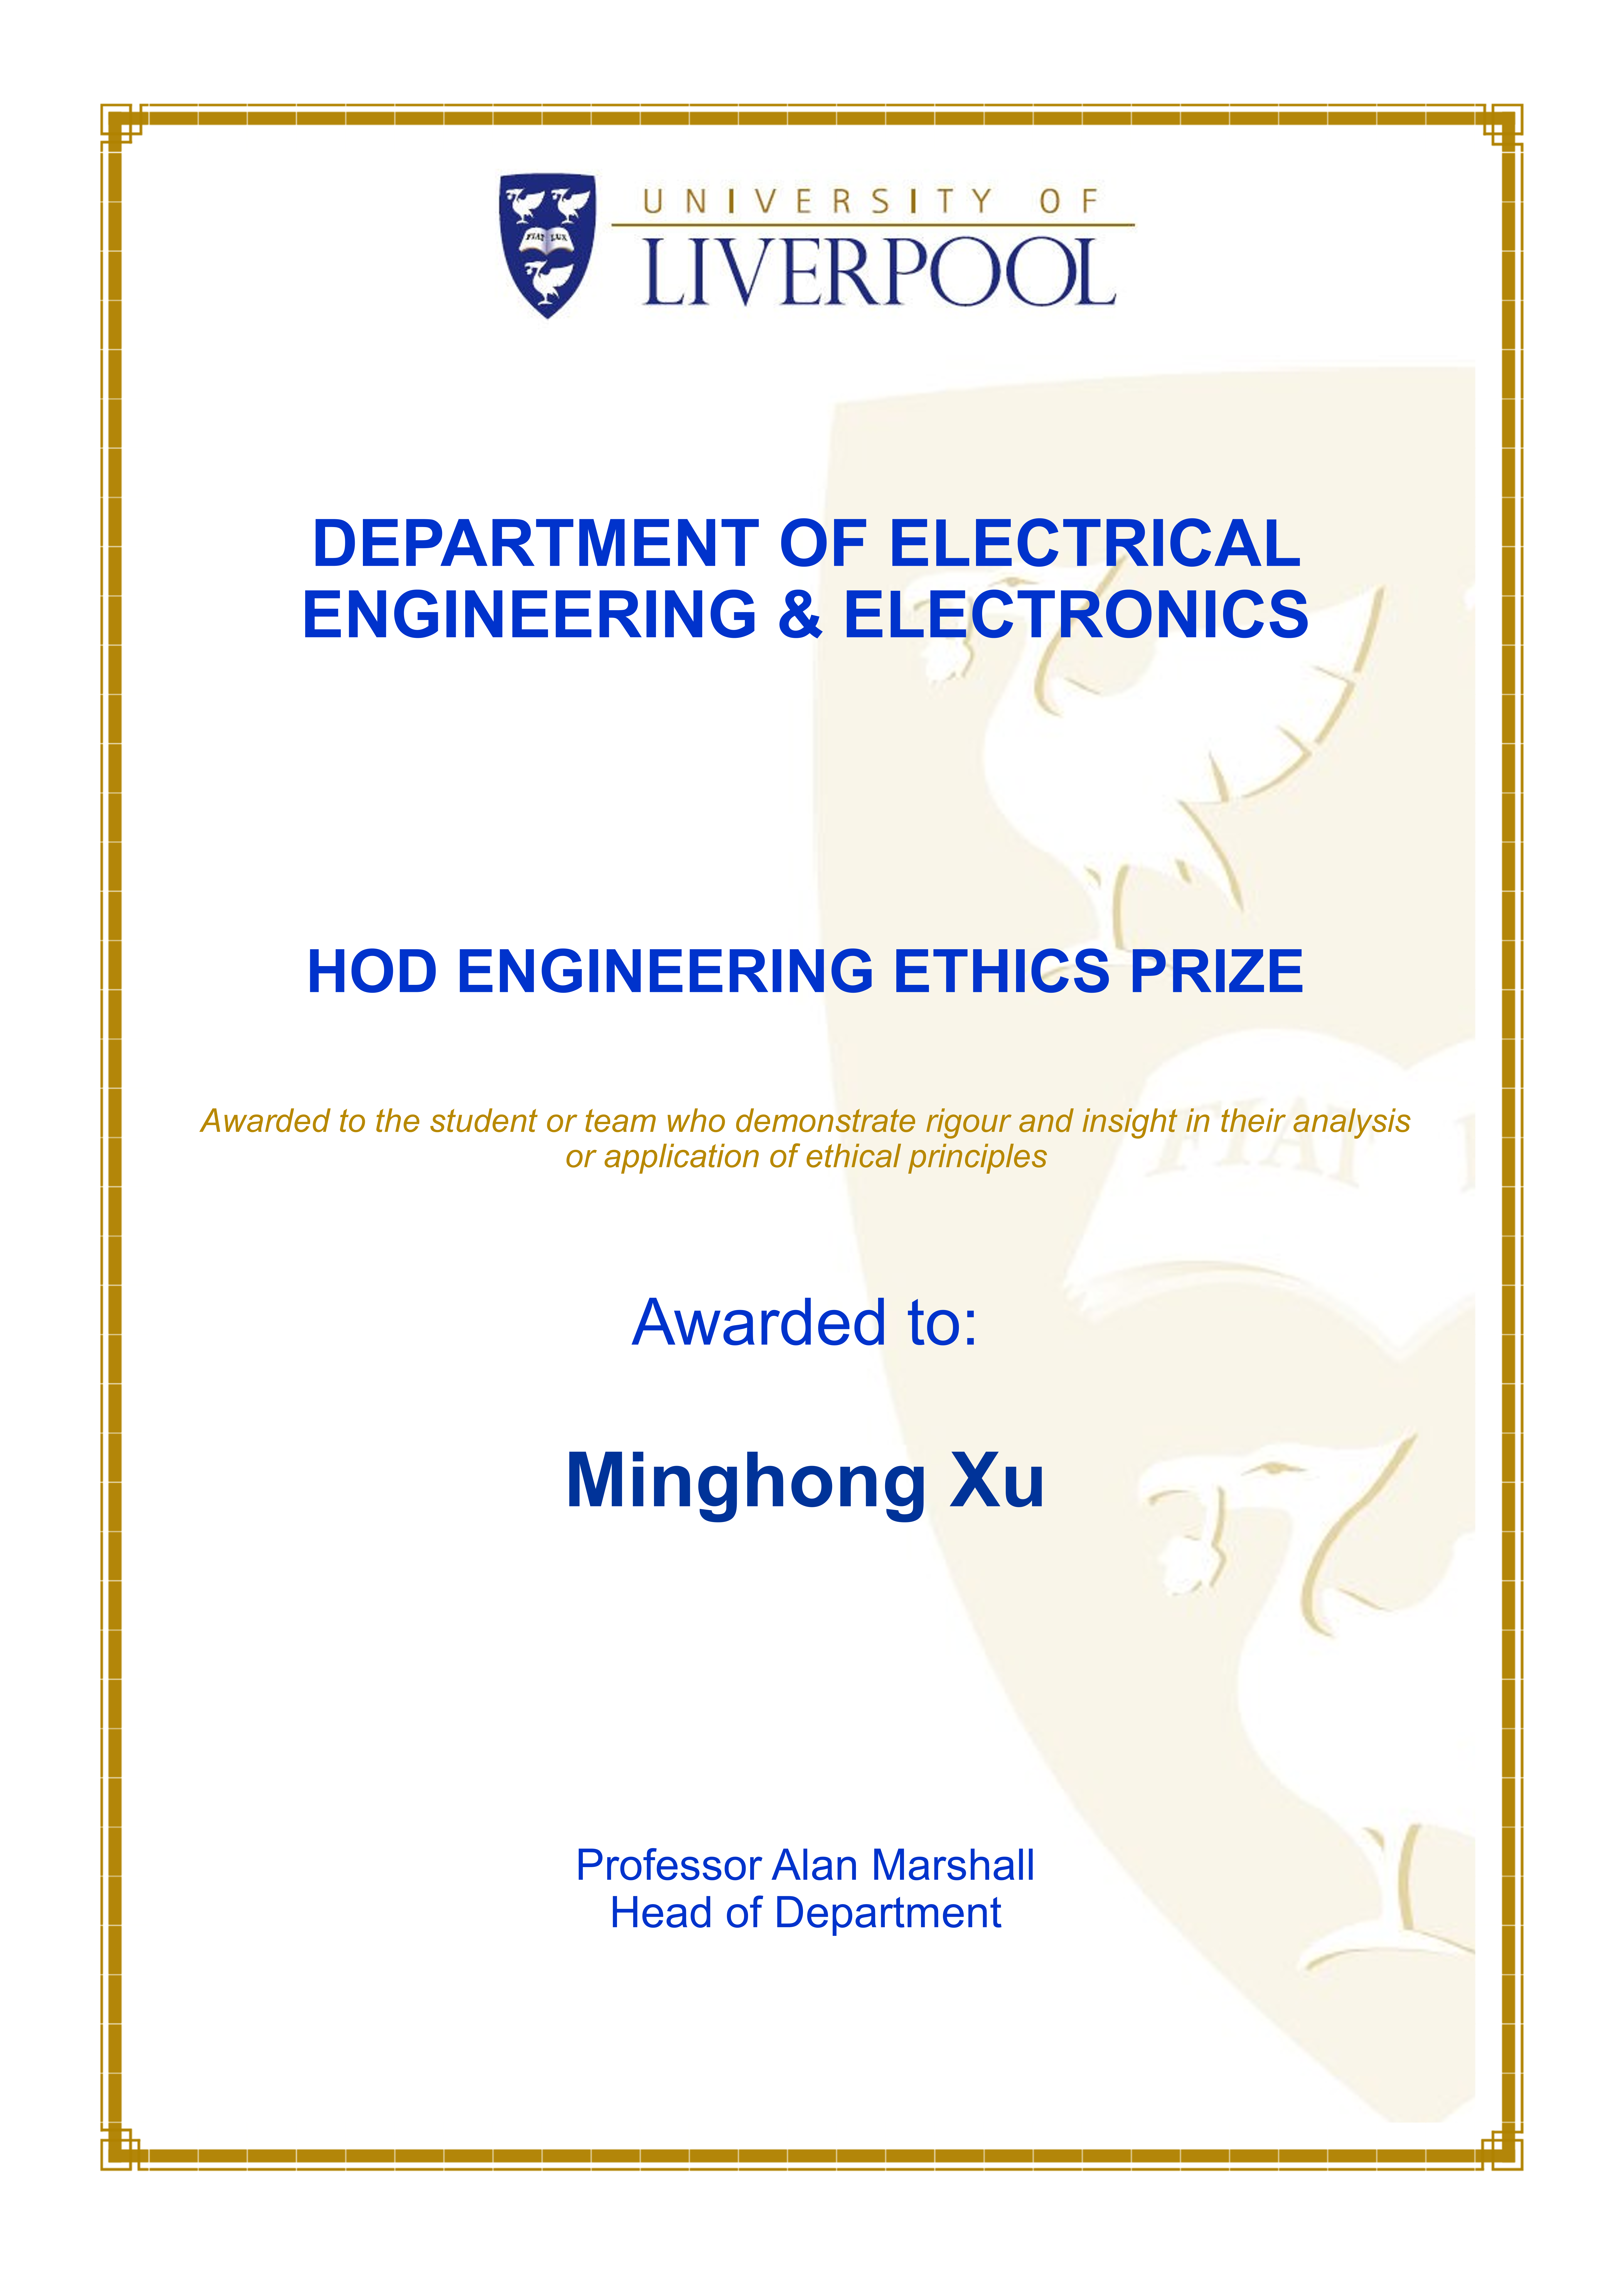 HoD Engineering Ethics Prize